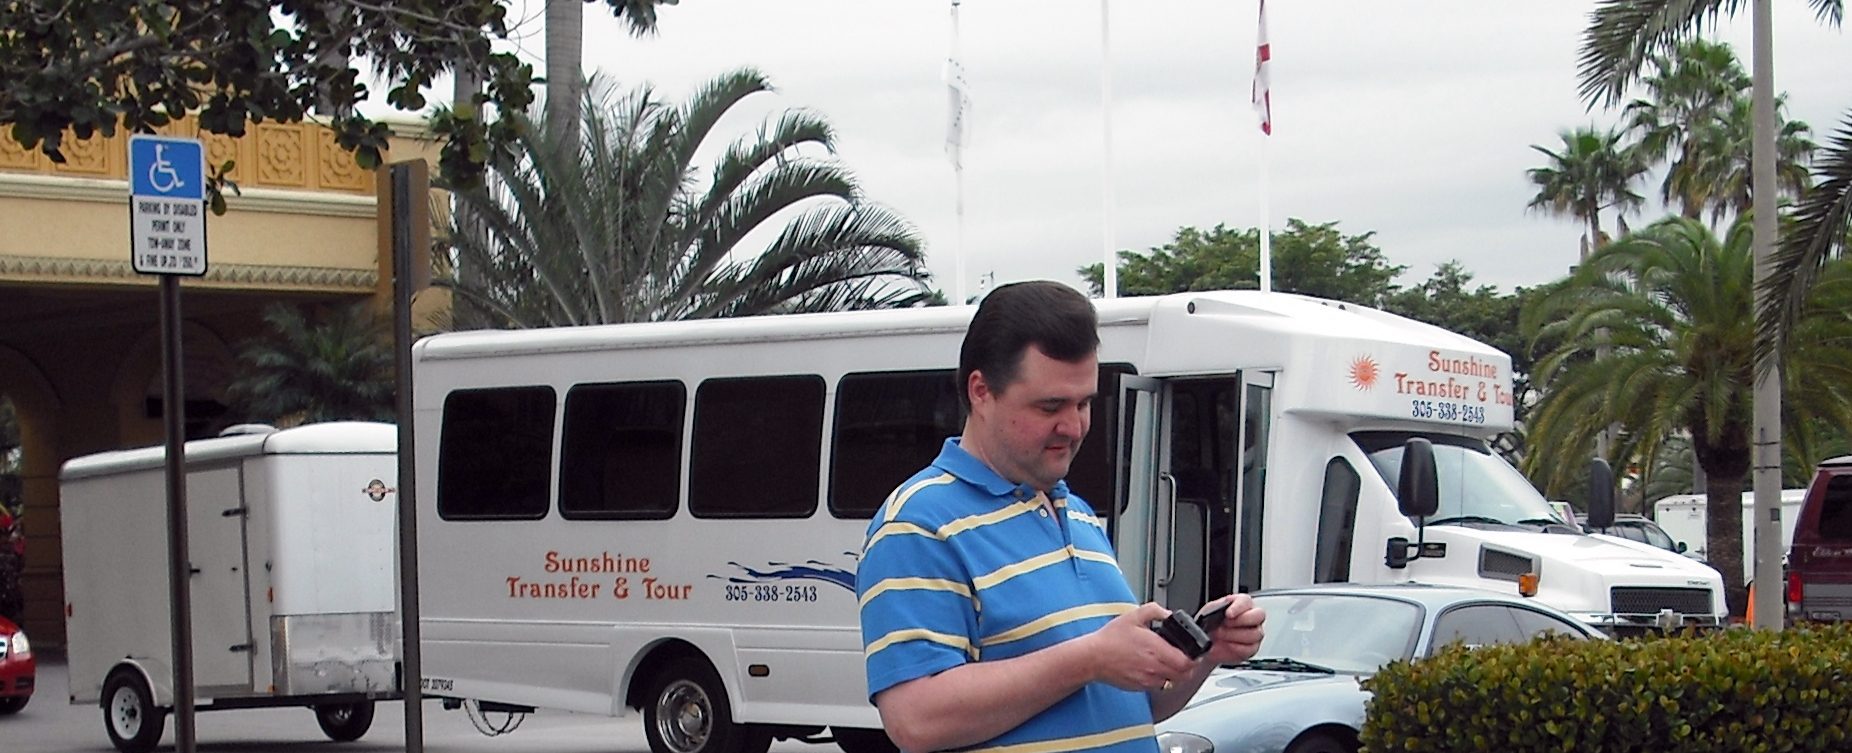 a man standing next to a bus